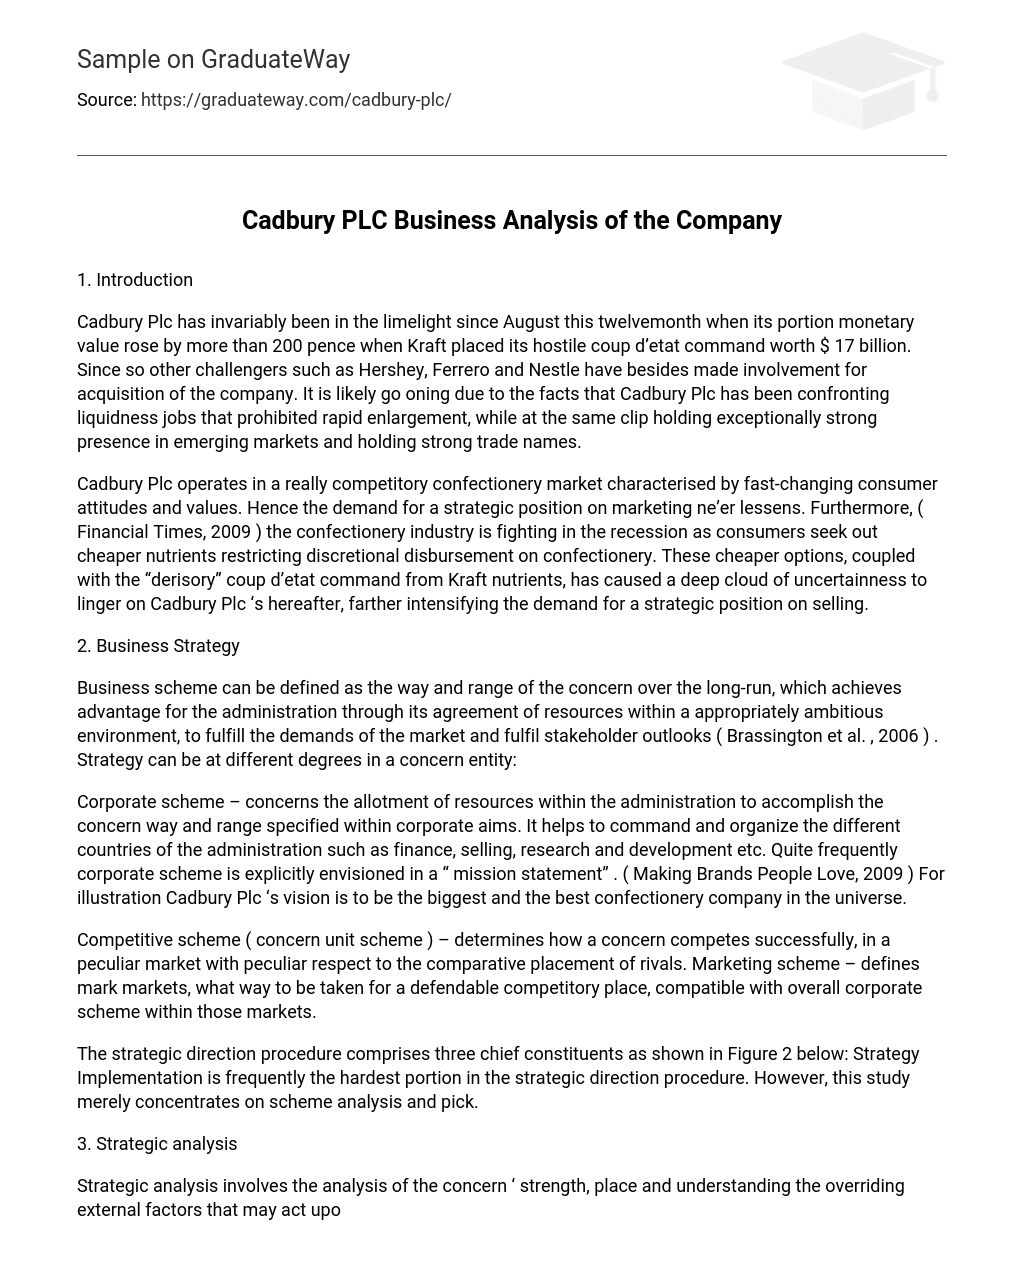 Cadbury PLC Business Analysis of the Company